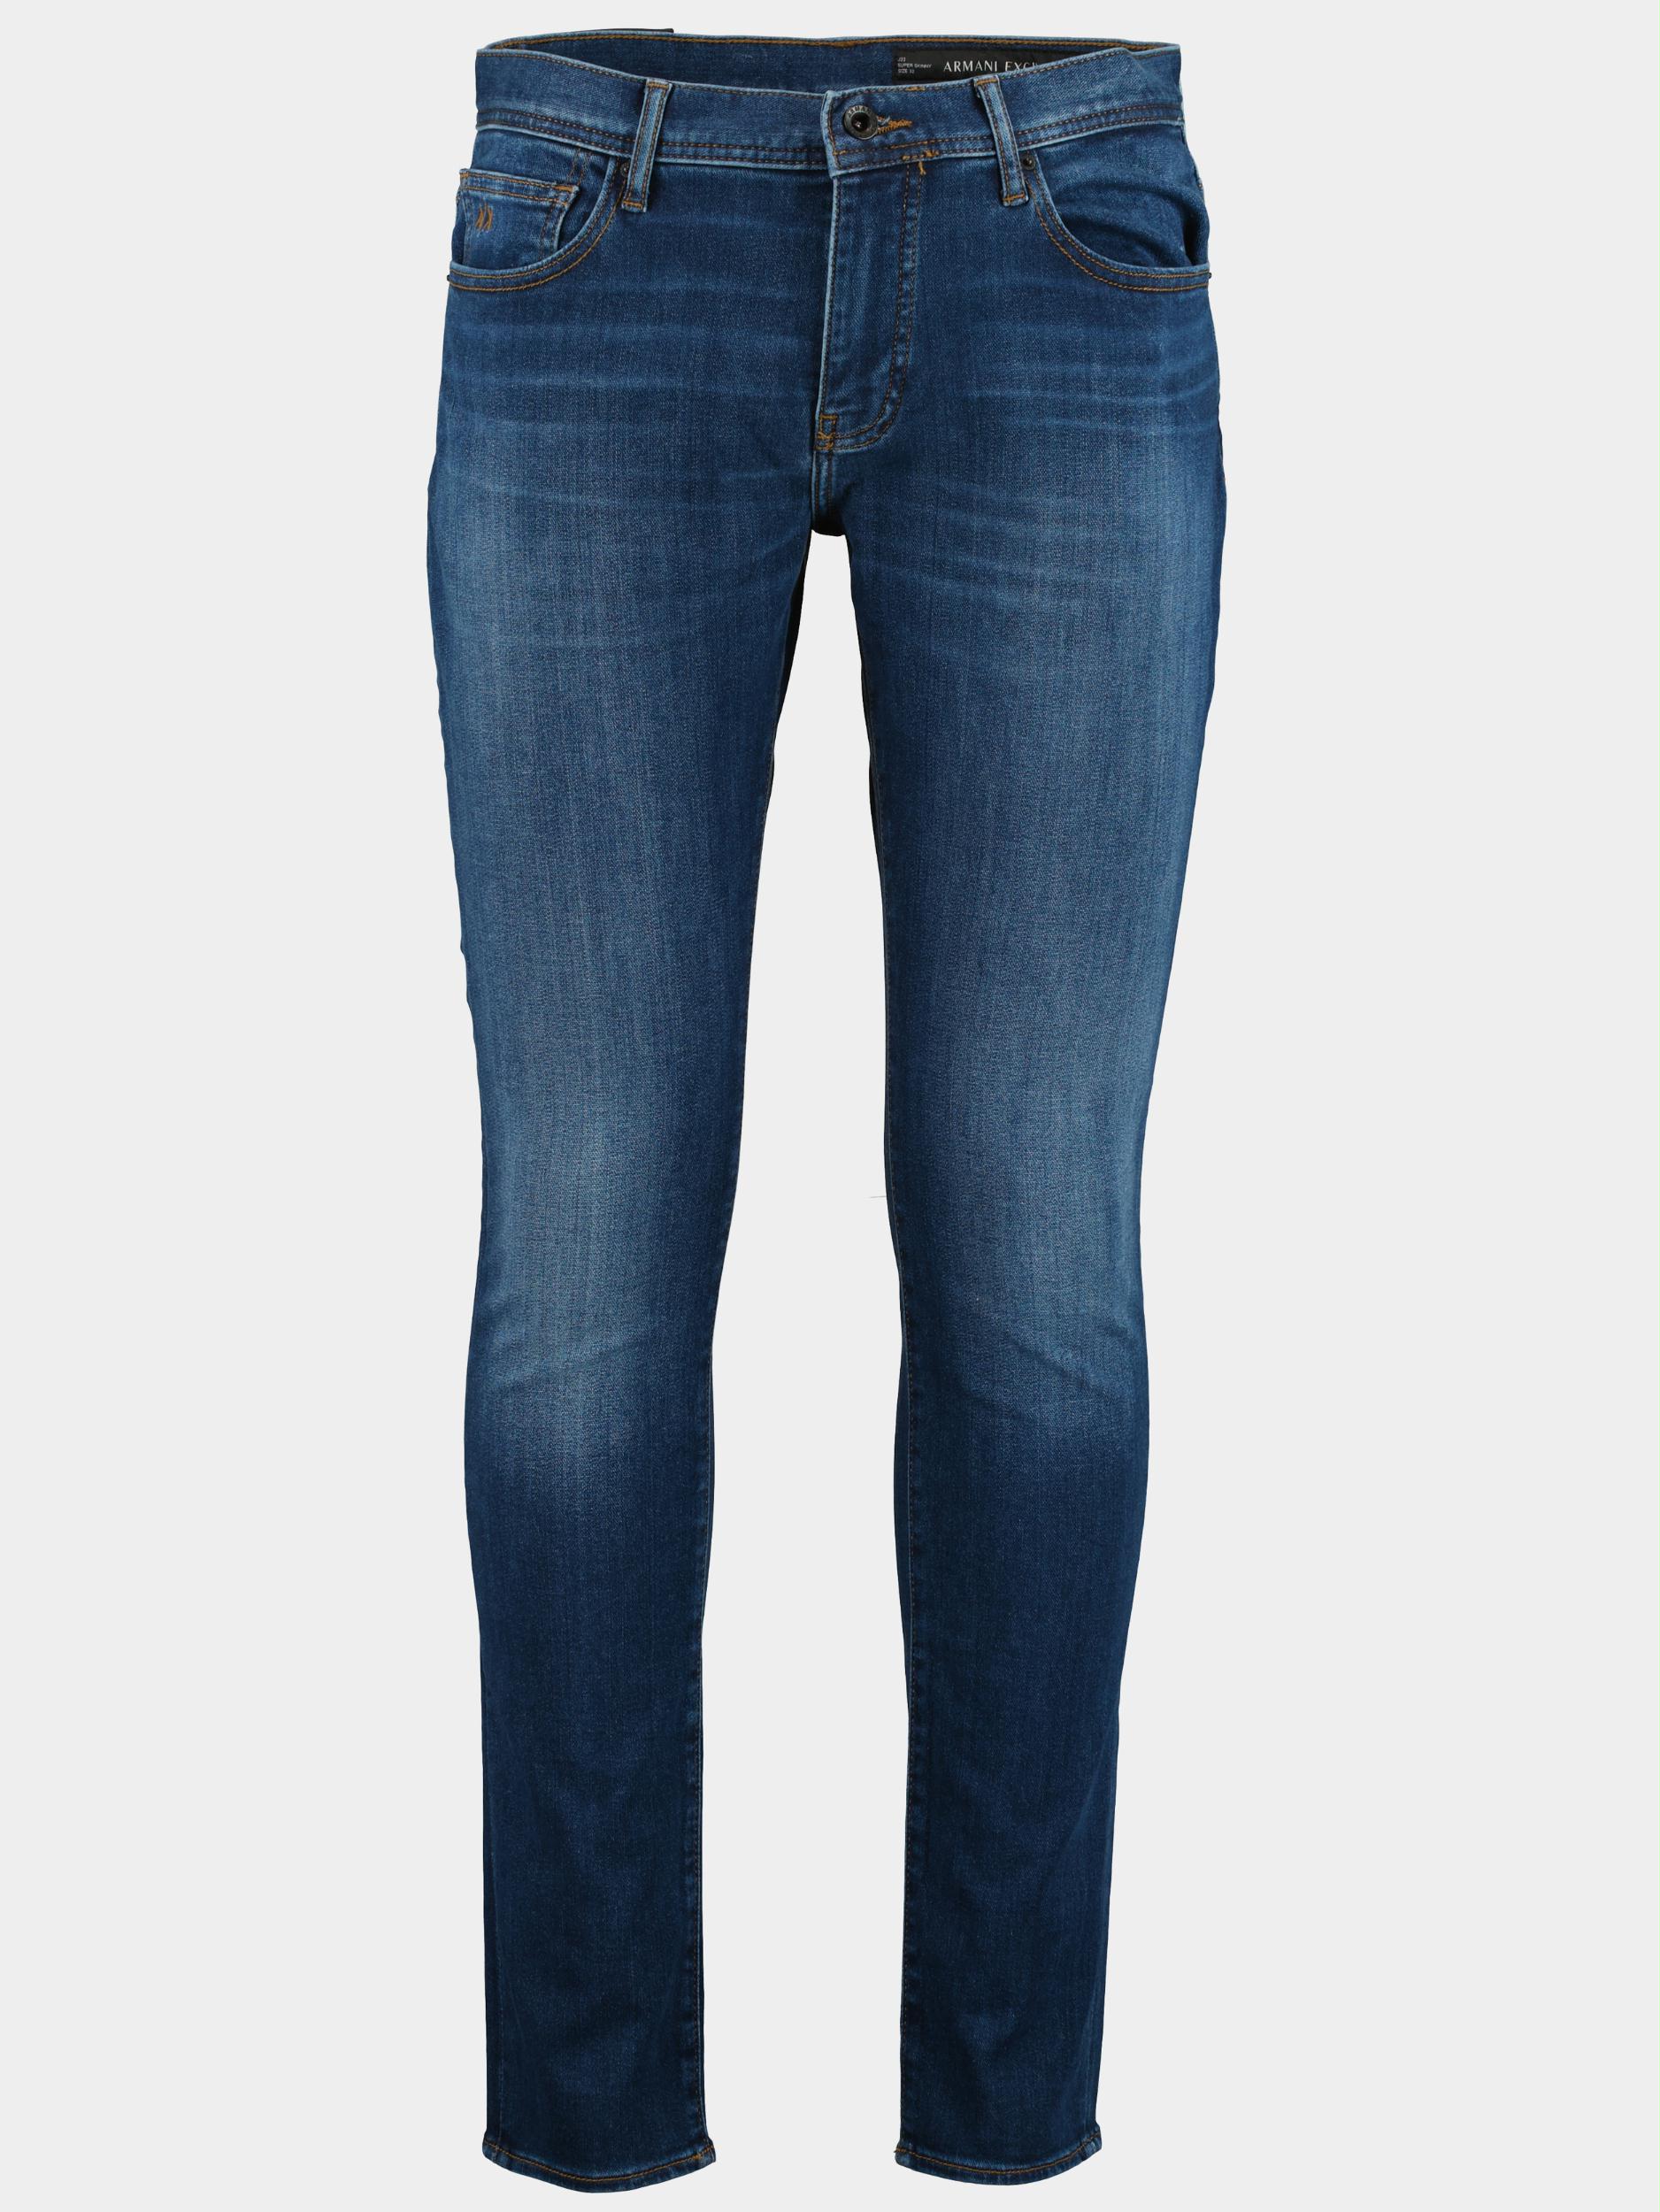 Afbeelding van Armani Exchange 5-pocket jeans 3rzj33.z1xxz/1500